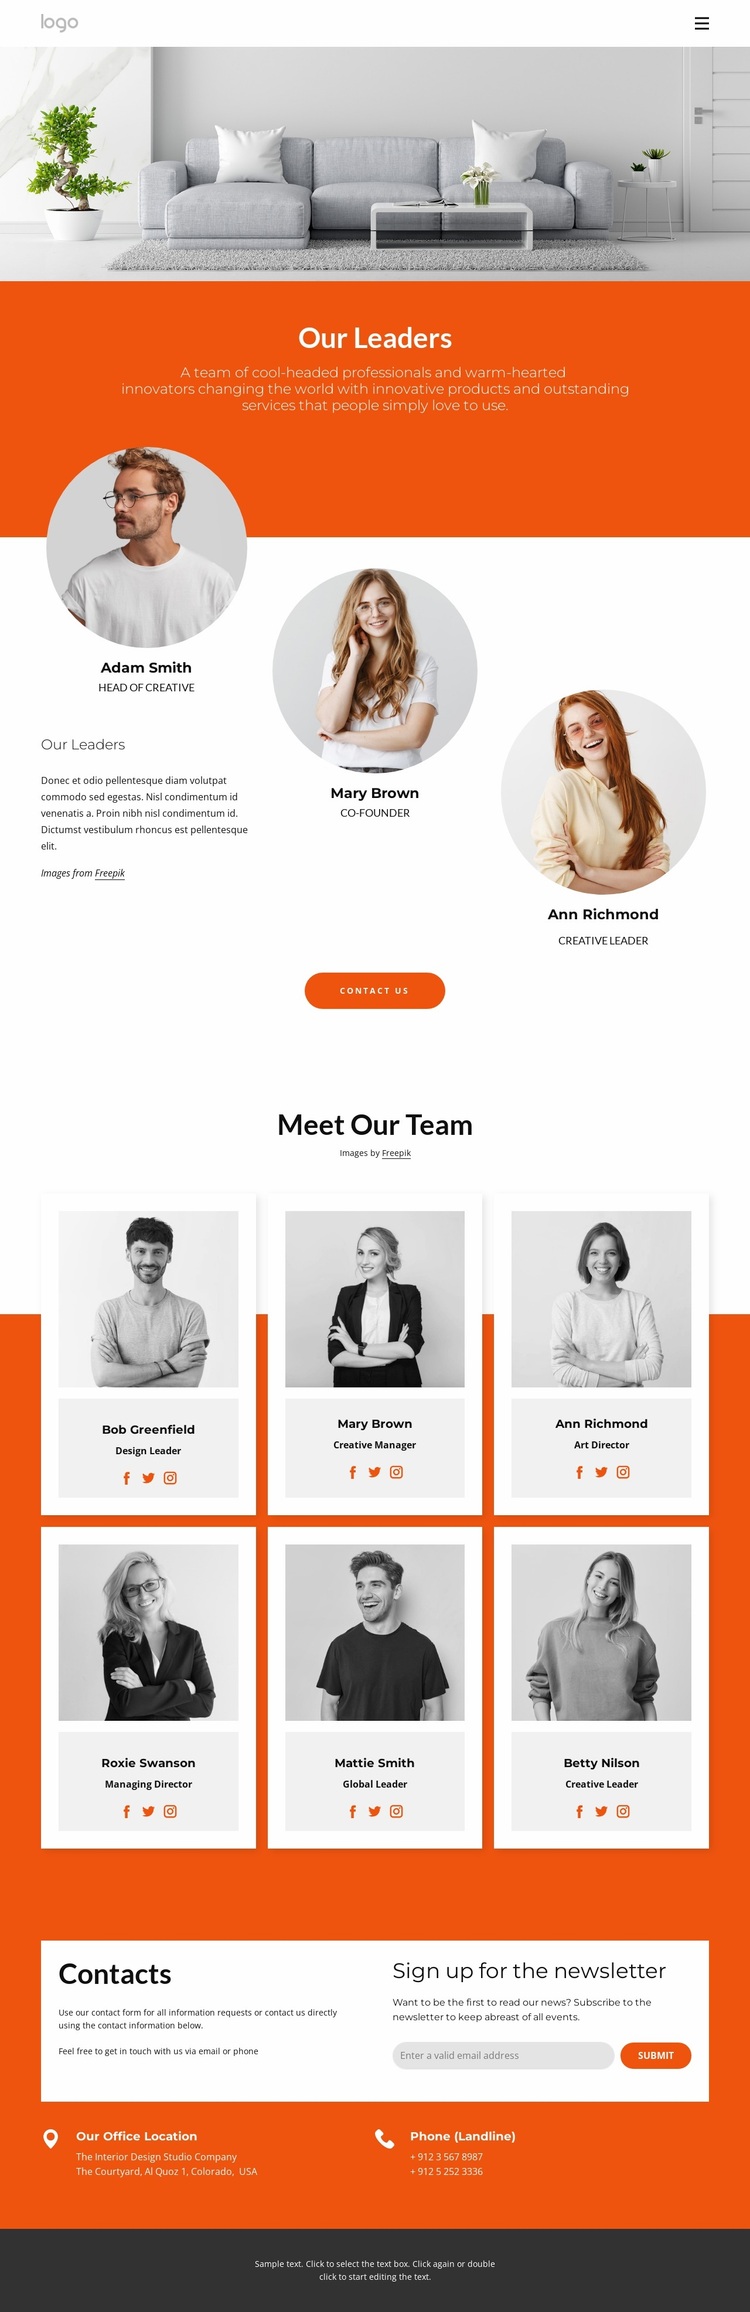 Our great team Website Design